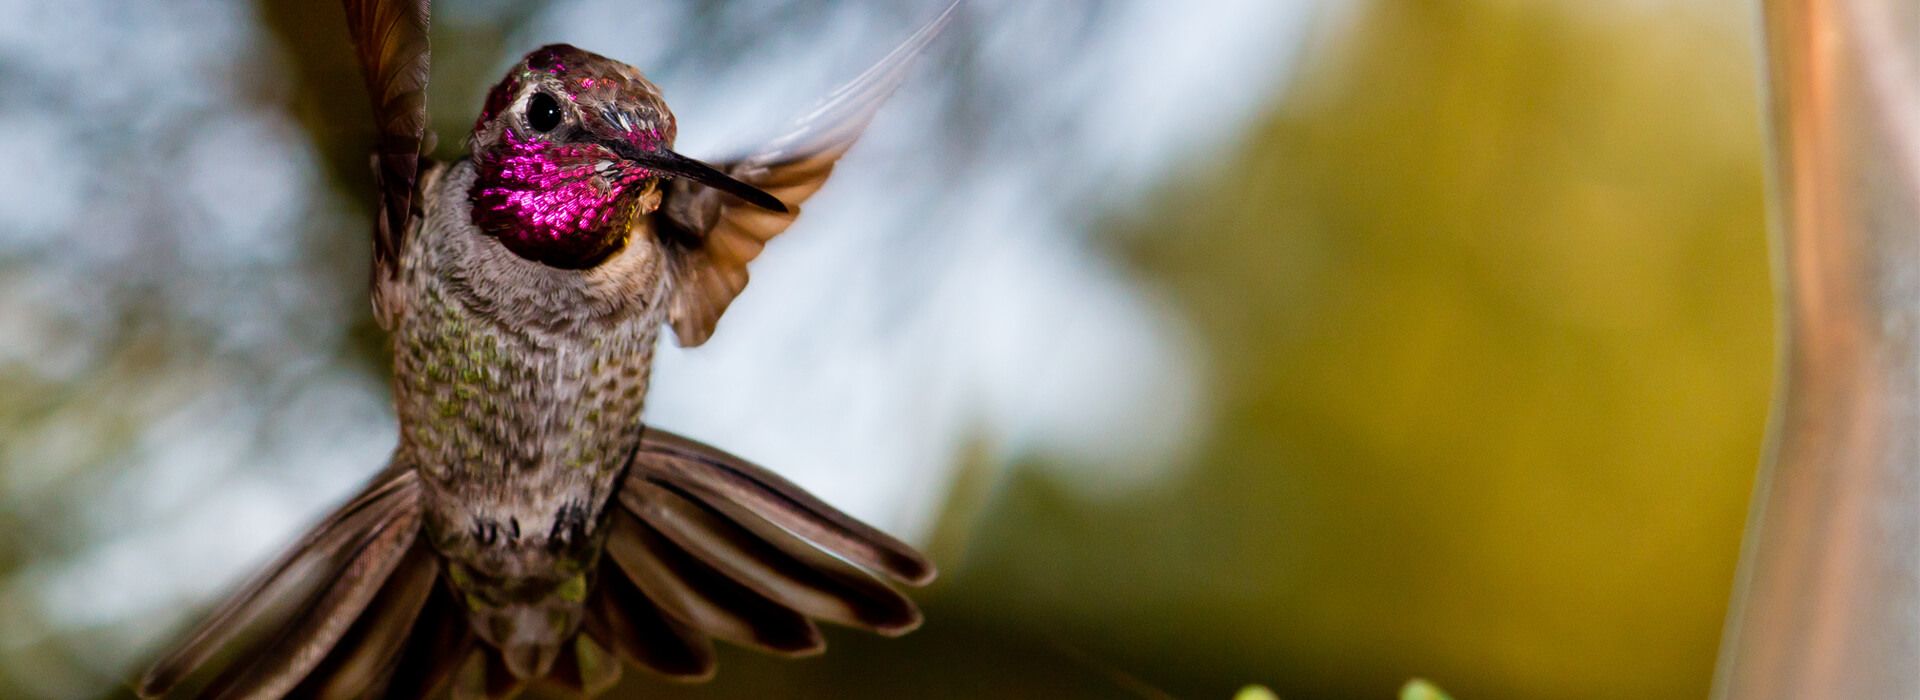 Anna's Hummingbird, In the Light Photography/Shutterstock